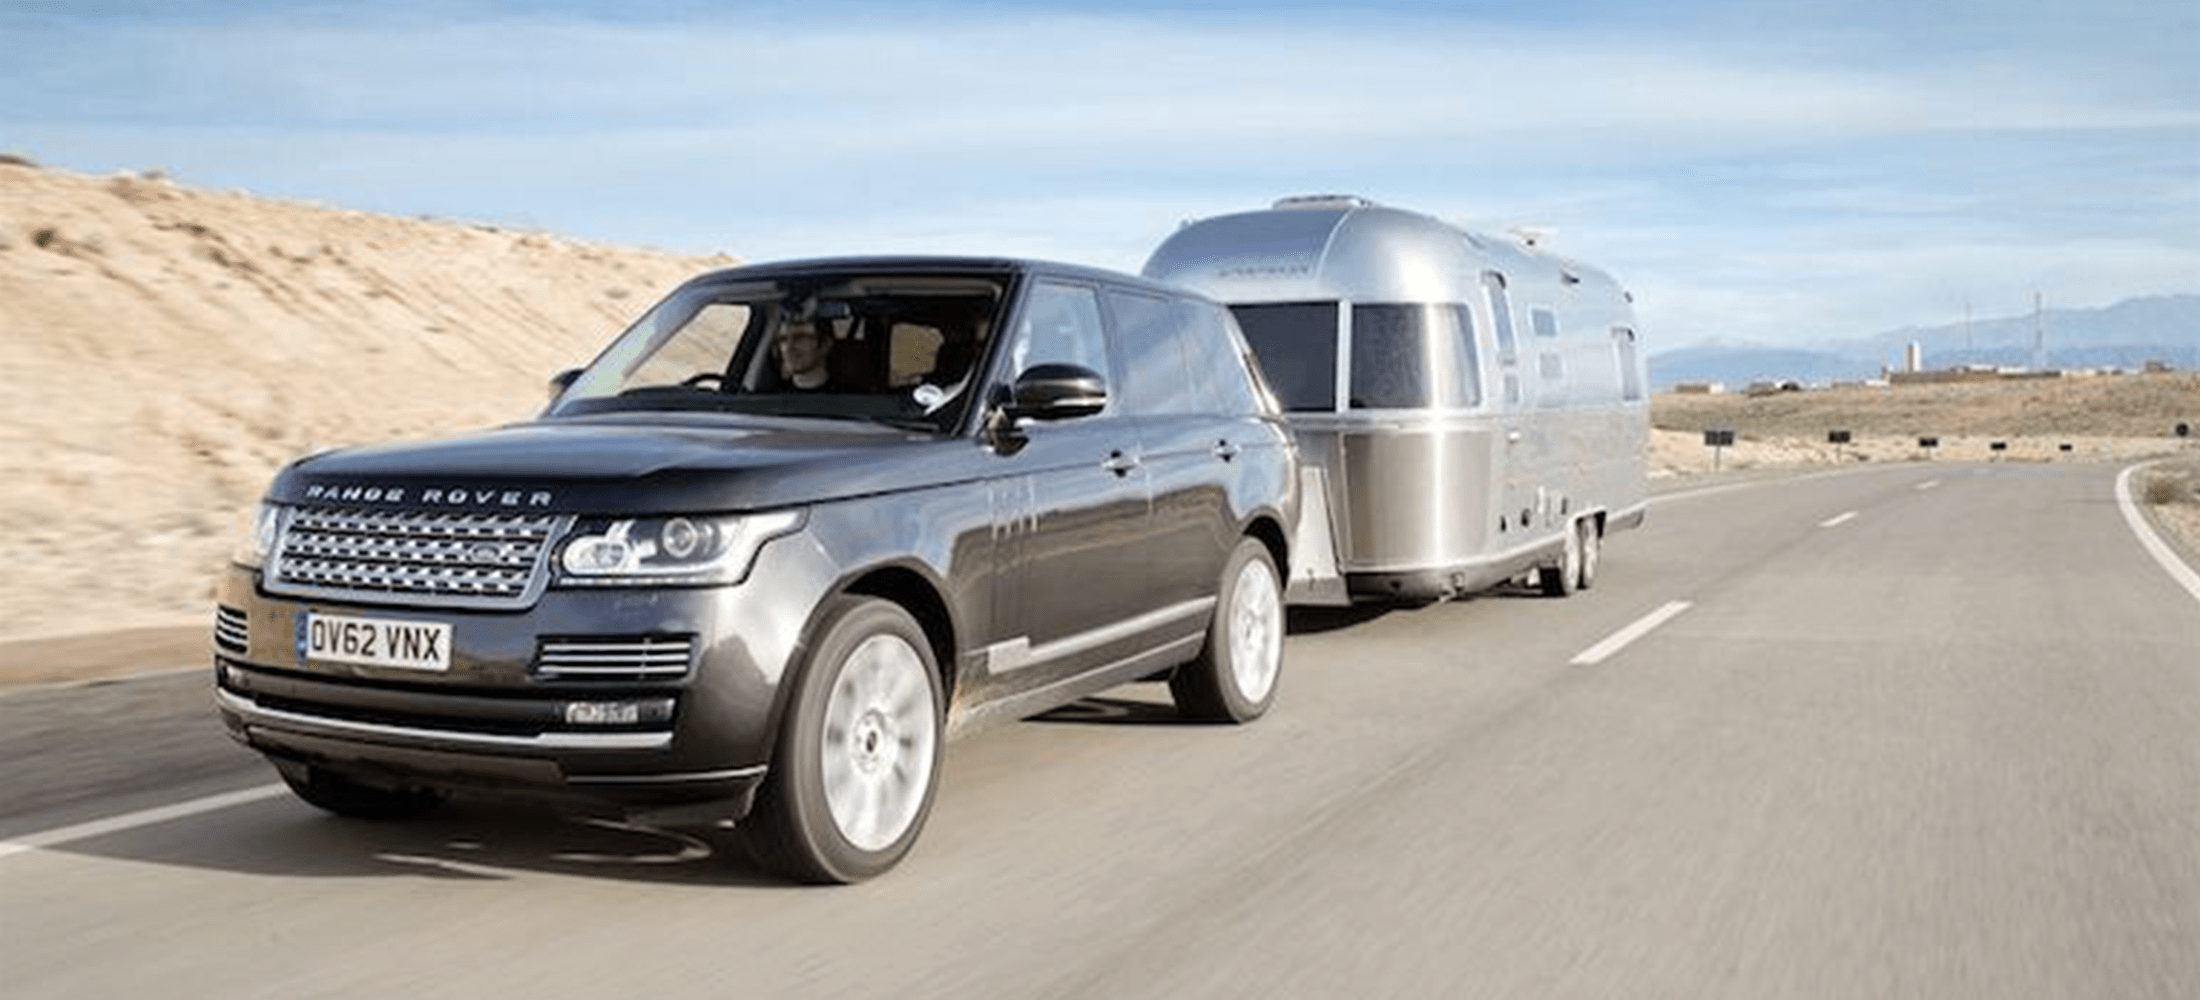 Leasingrückläufer Land Rover mit Anhänger